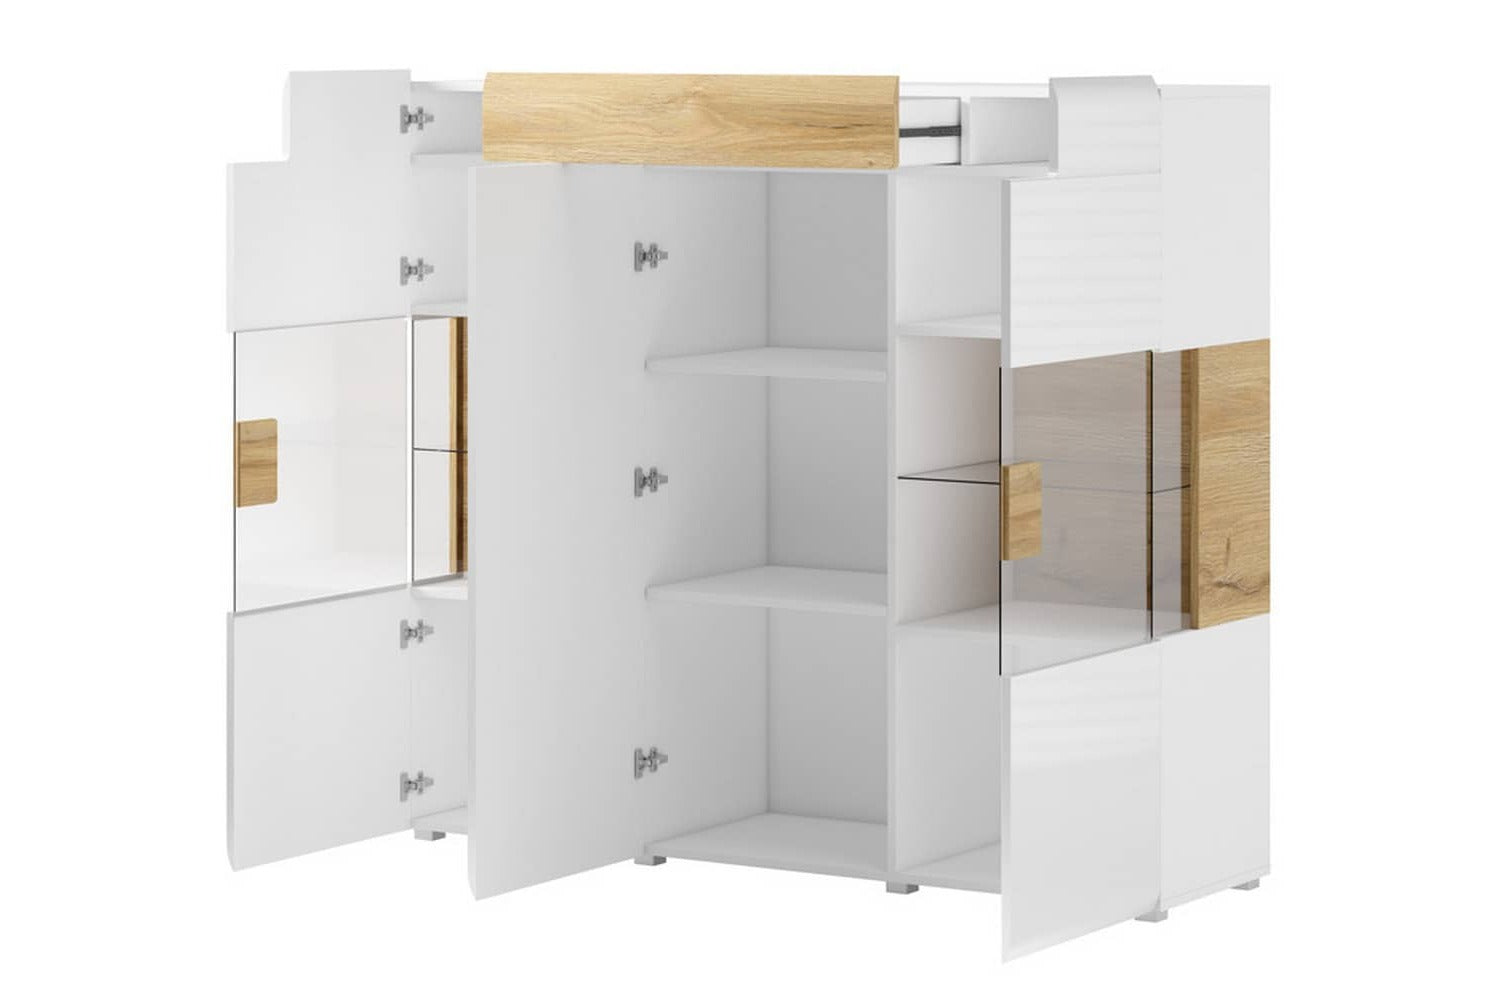 Toledo 46 Sideboard Display Cabinet-Living Sideboard Cabinet